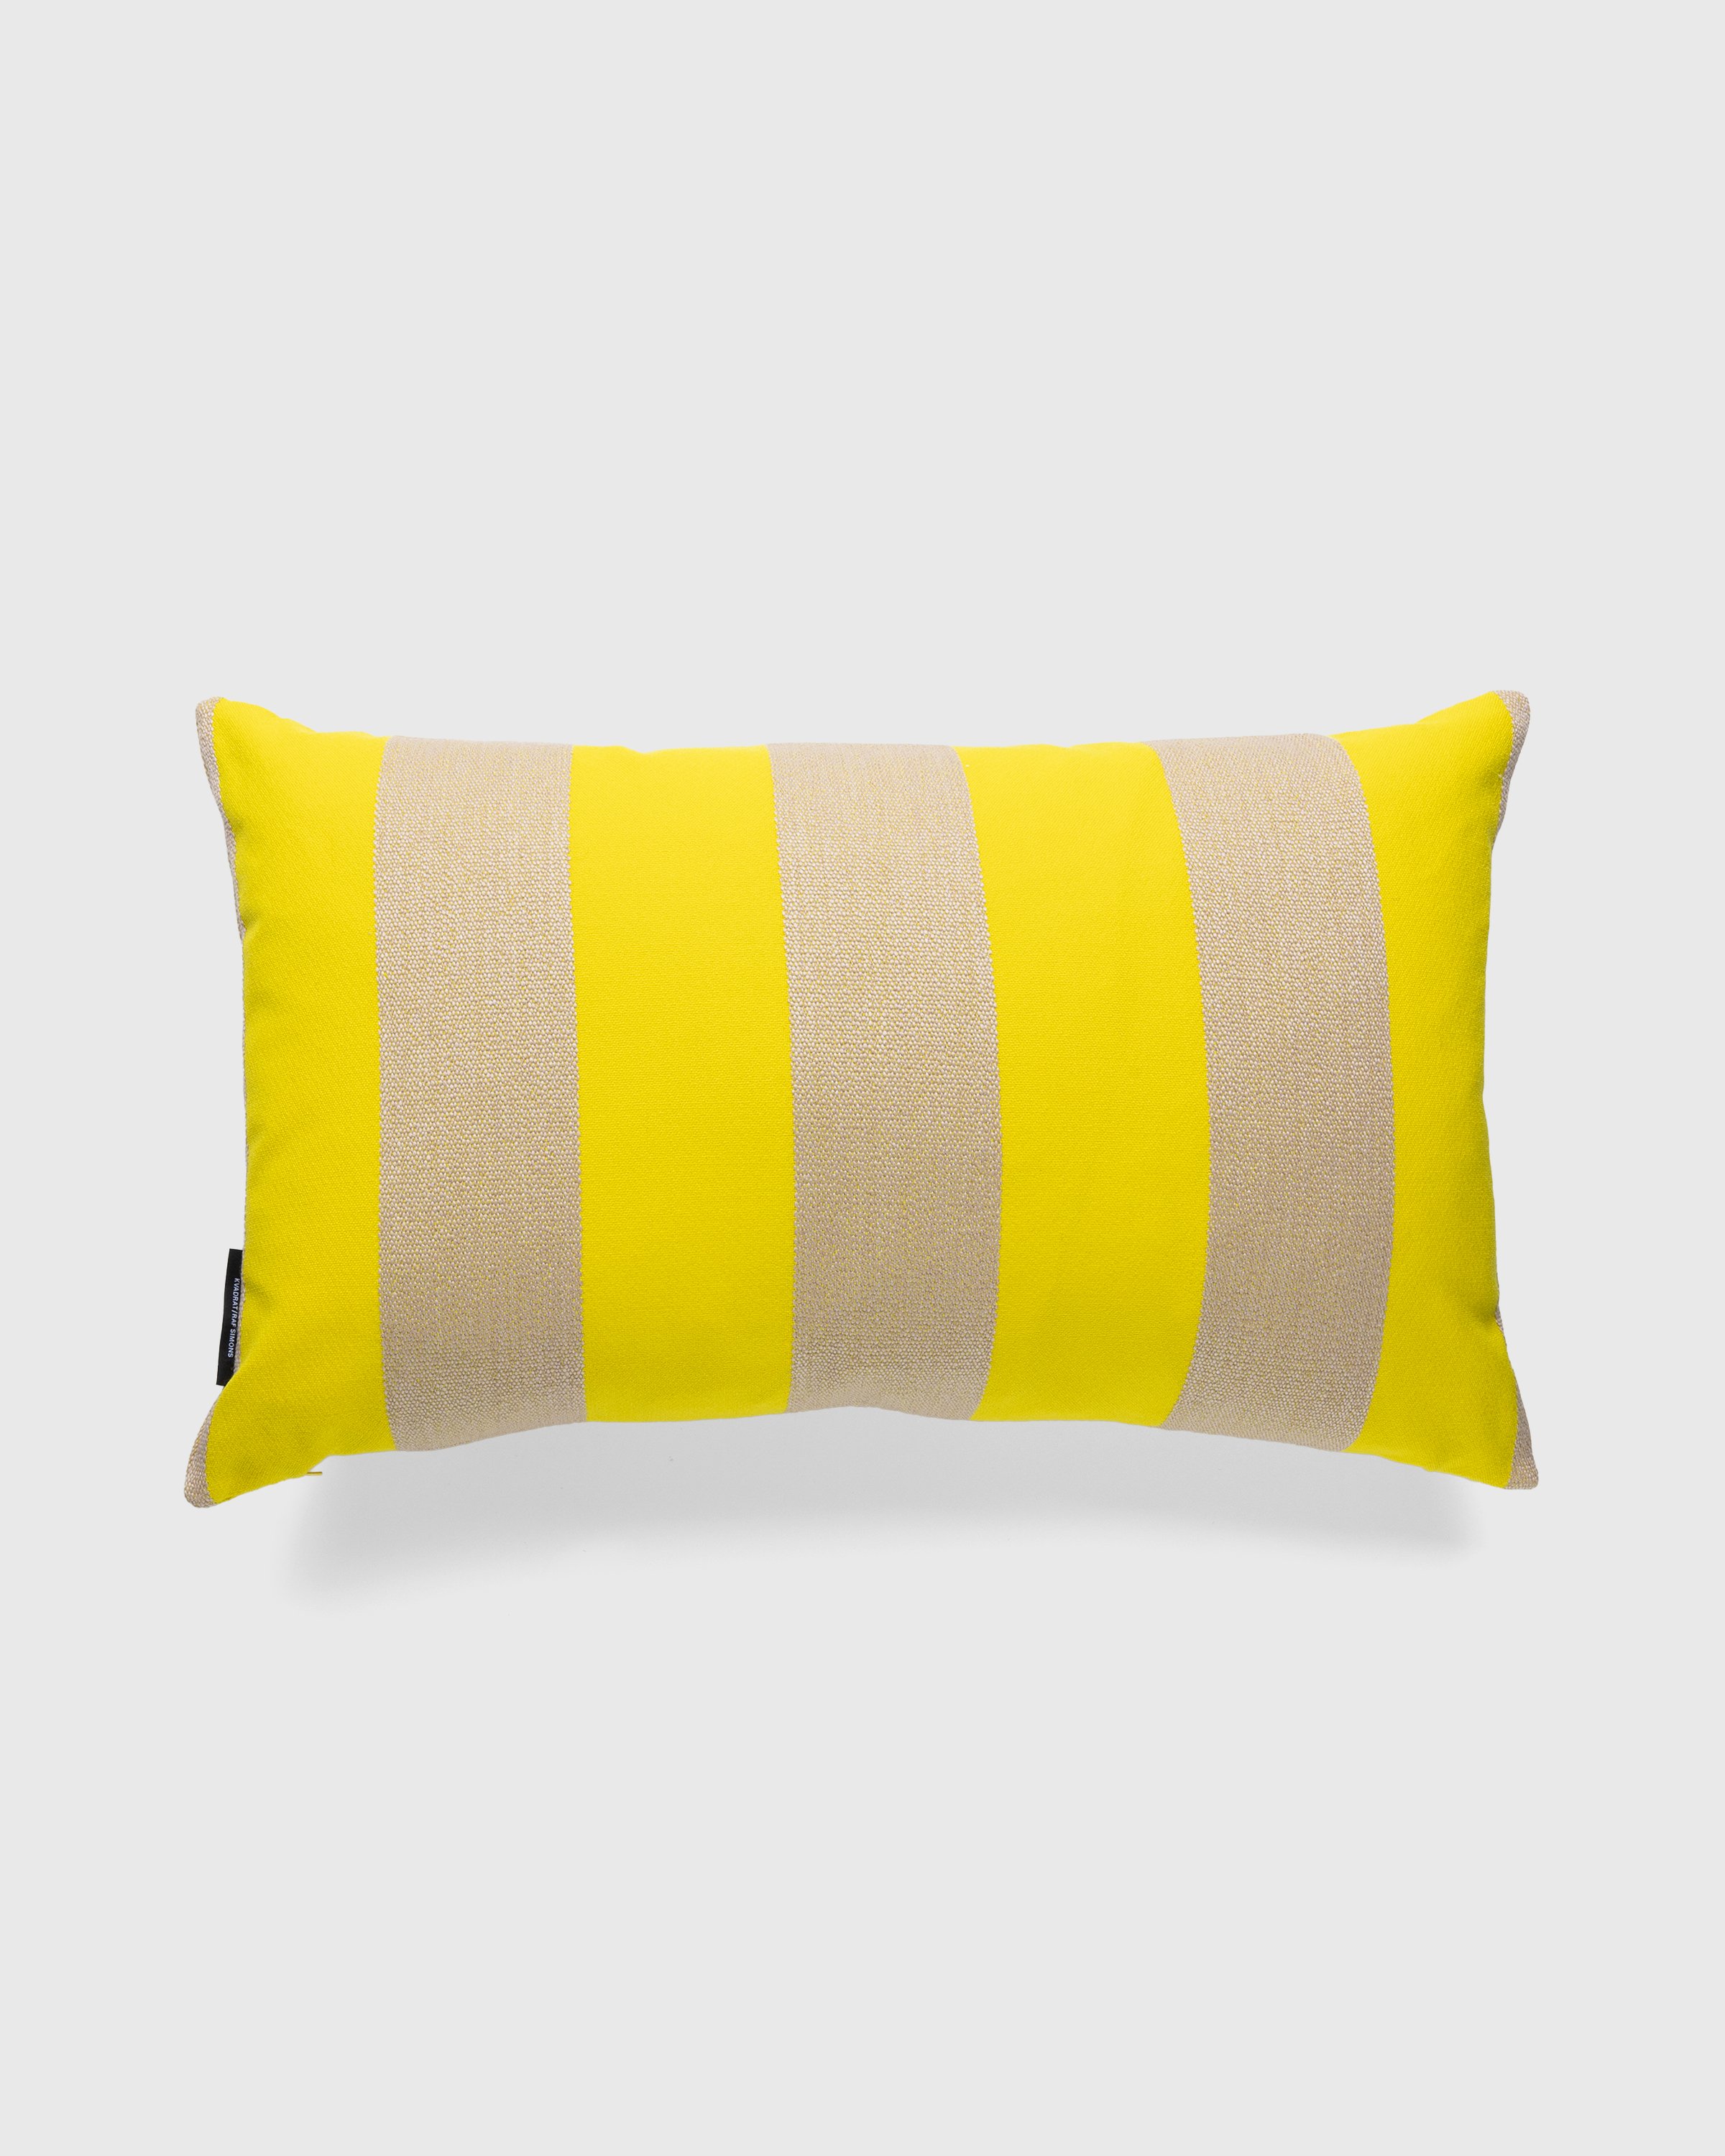 Kvadrat/Raf Simons - Reflex Pillow Multi - Lifestyle - Yellow - Image 1